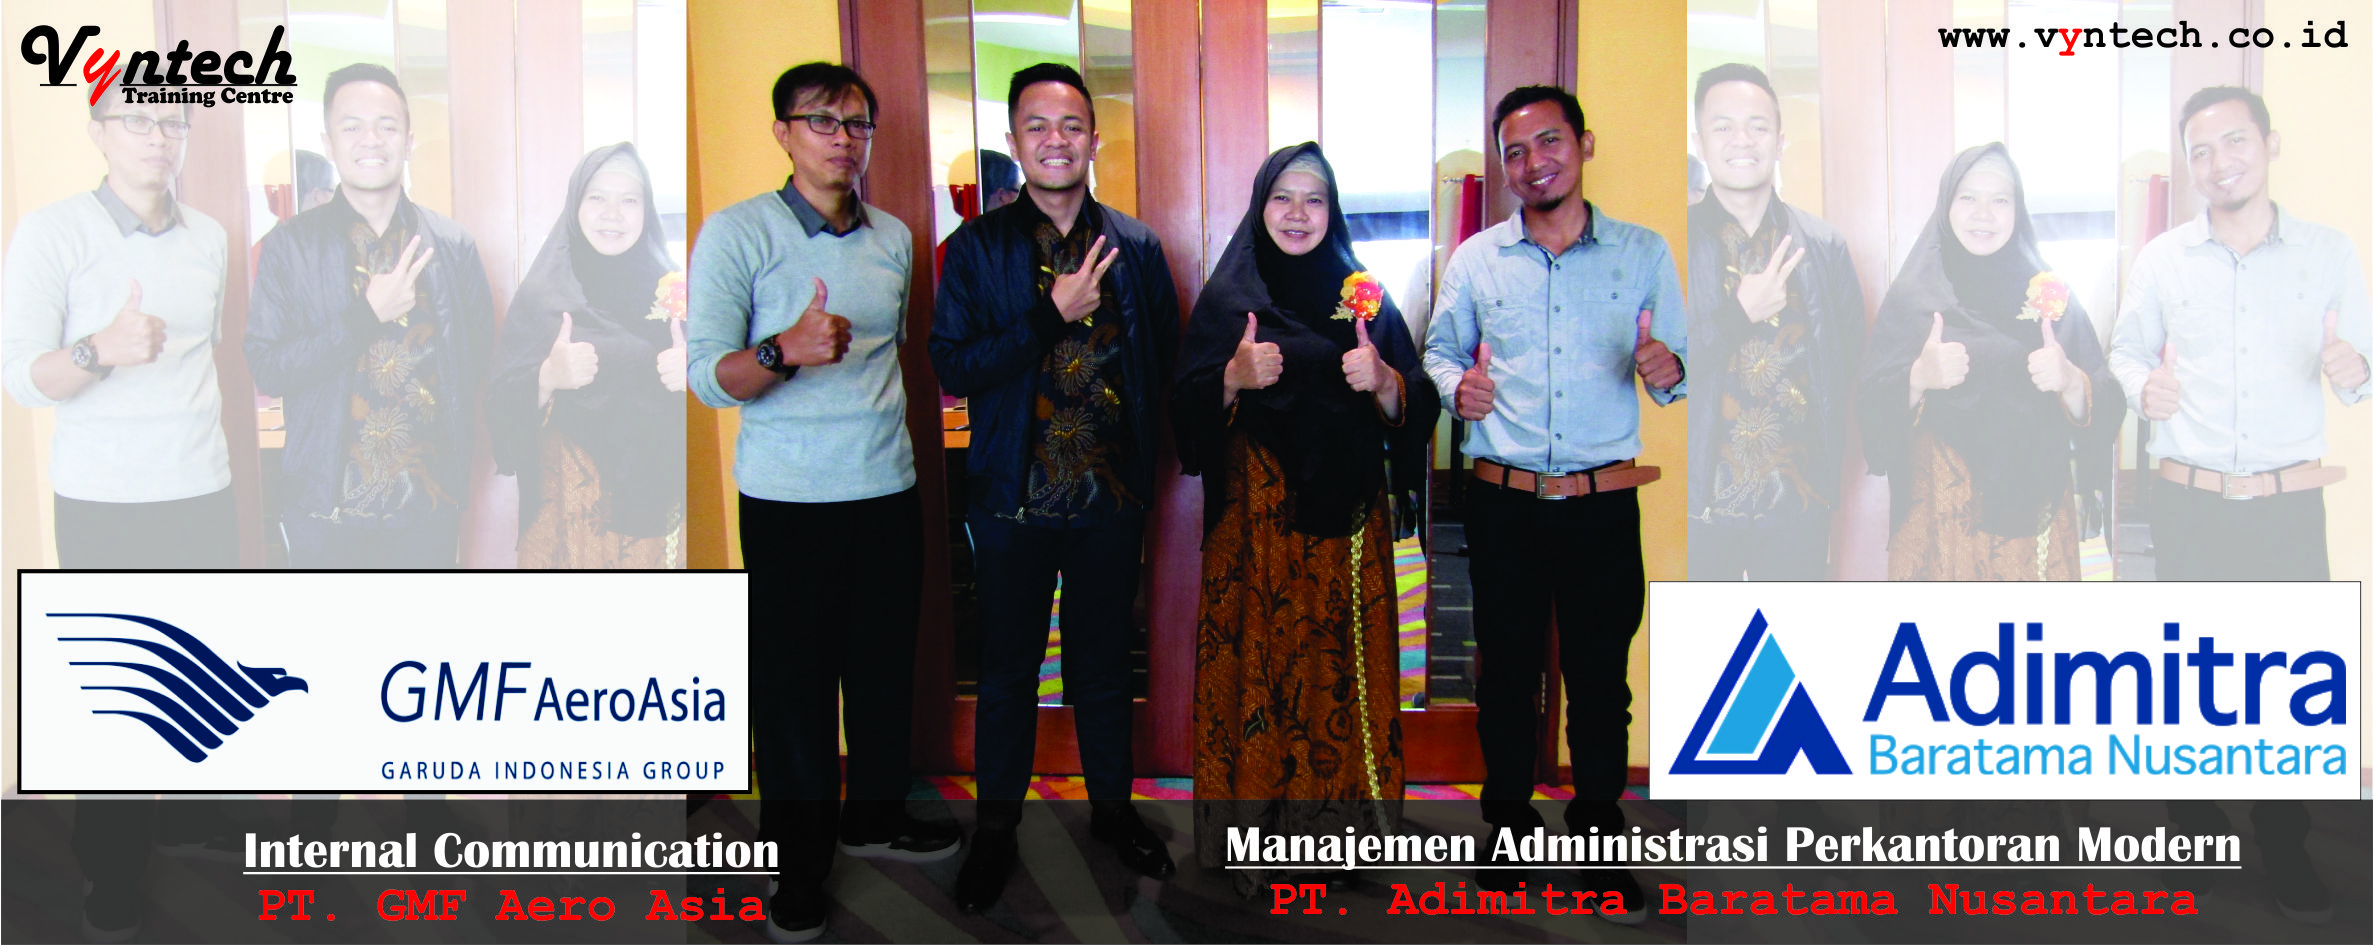 20170814 Training Internal Communication (Komunikasi) - PT GMF Aero Asia -- Manajemen Administrasi Perkantoran Modern - PT Adimitra Barata Nusantara